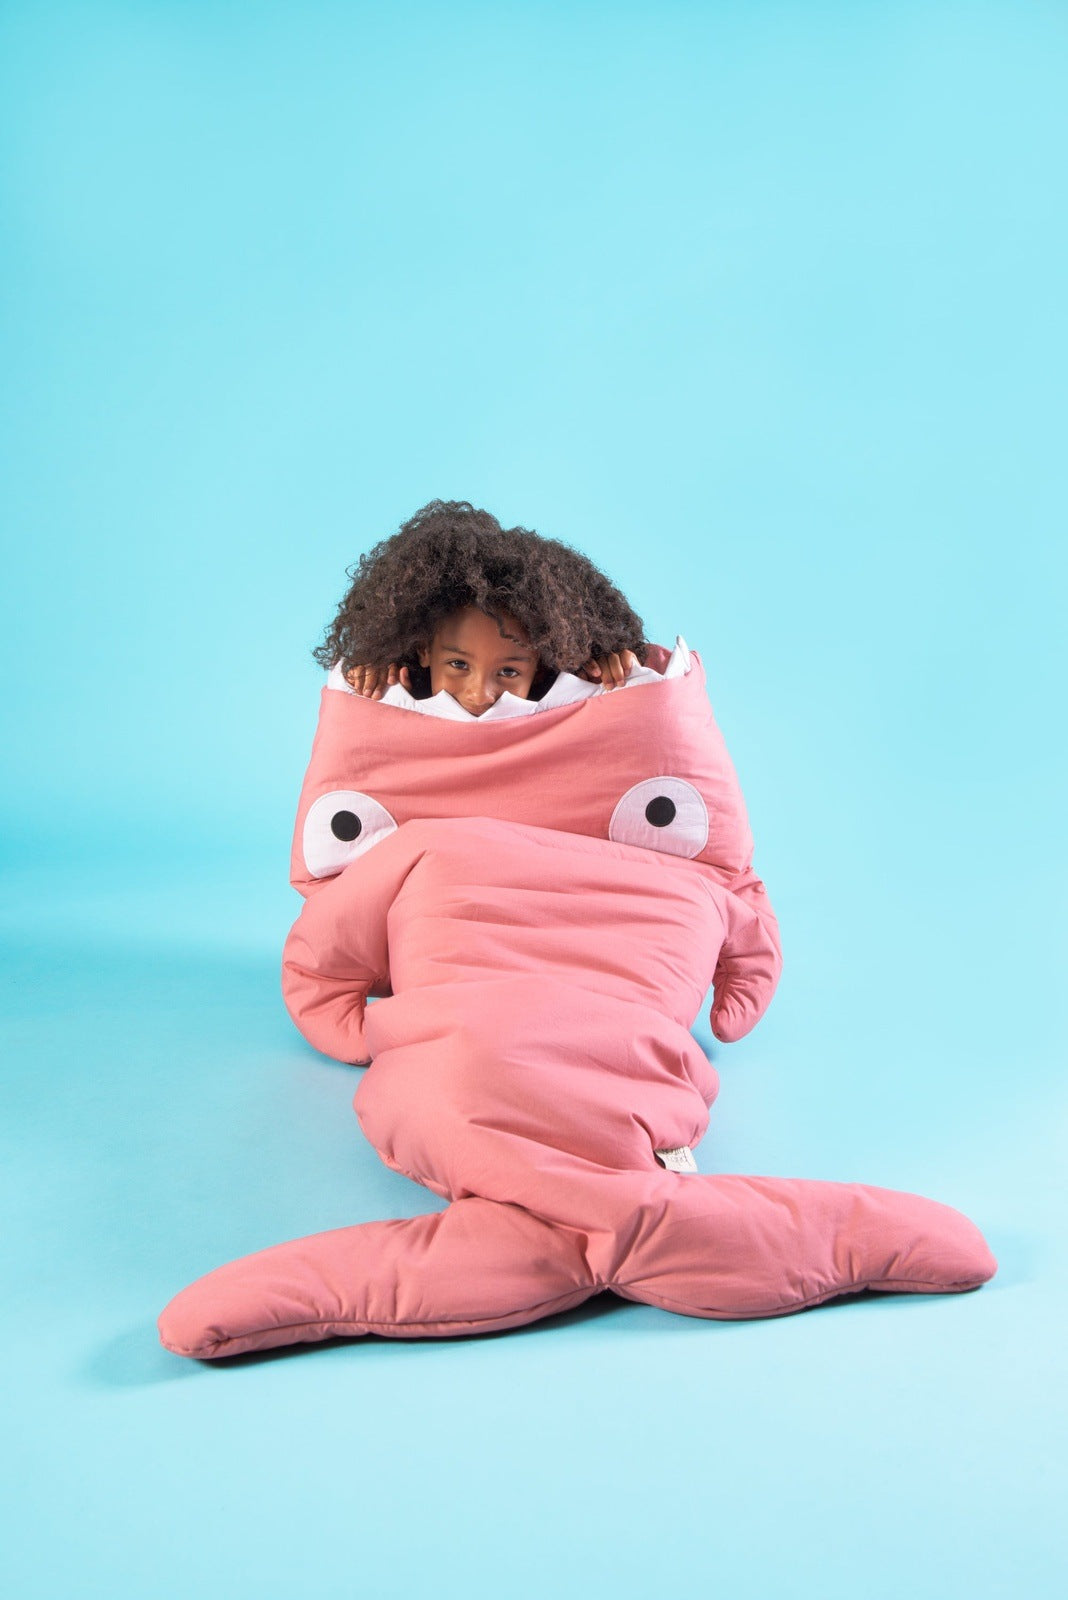 Fishy in PINK KIDS Sleeping Bag  || سليب باق السمكه للأطفال بـ اللون الوردي  👛 🎁